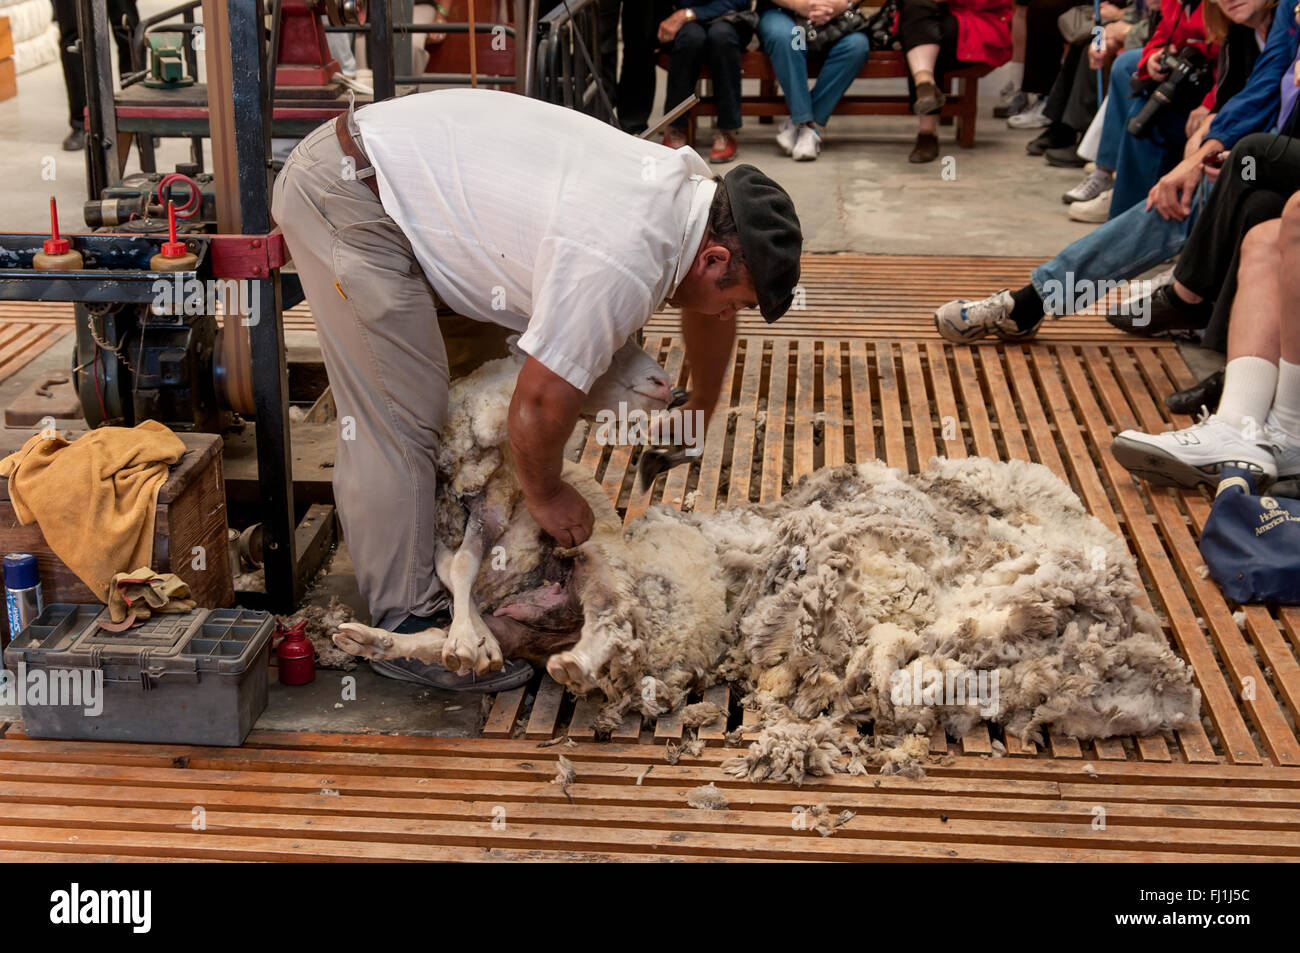 Gaucho, Argentinian cowboy, gives a demonstration of shearing sheep manually on a sheep farm Stock Photo